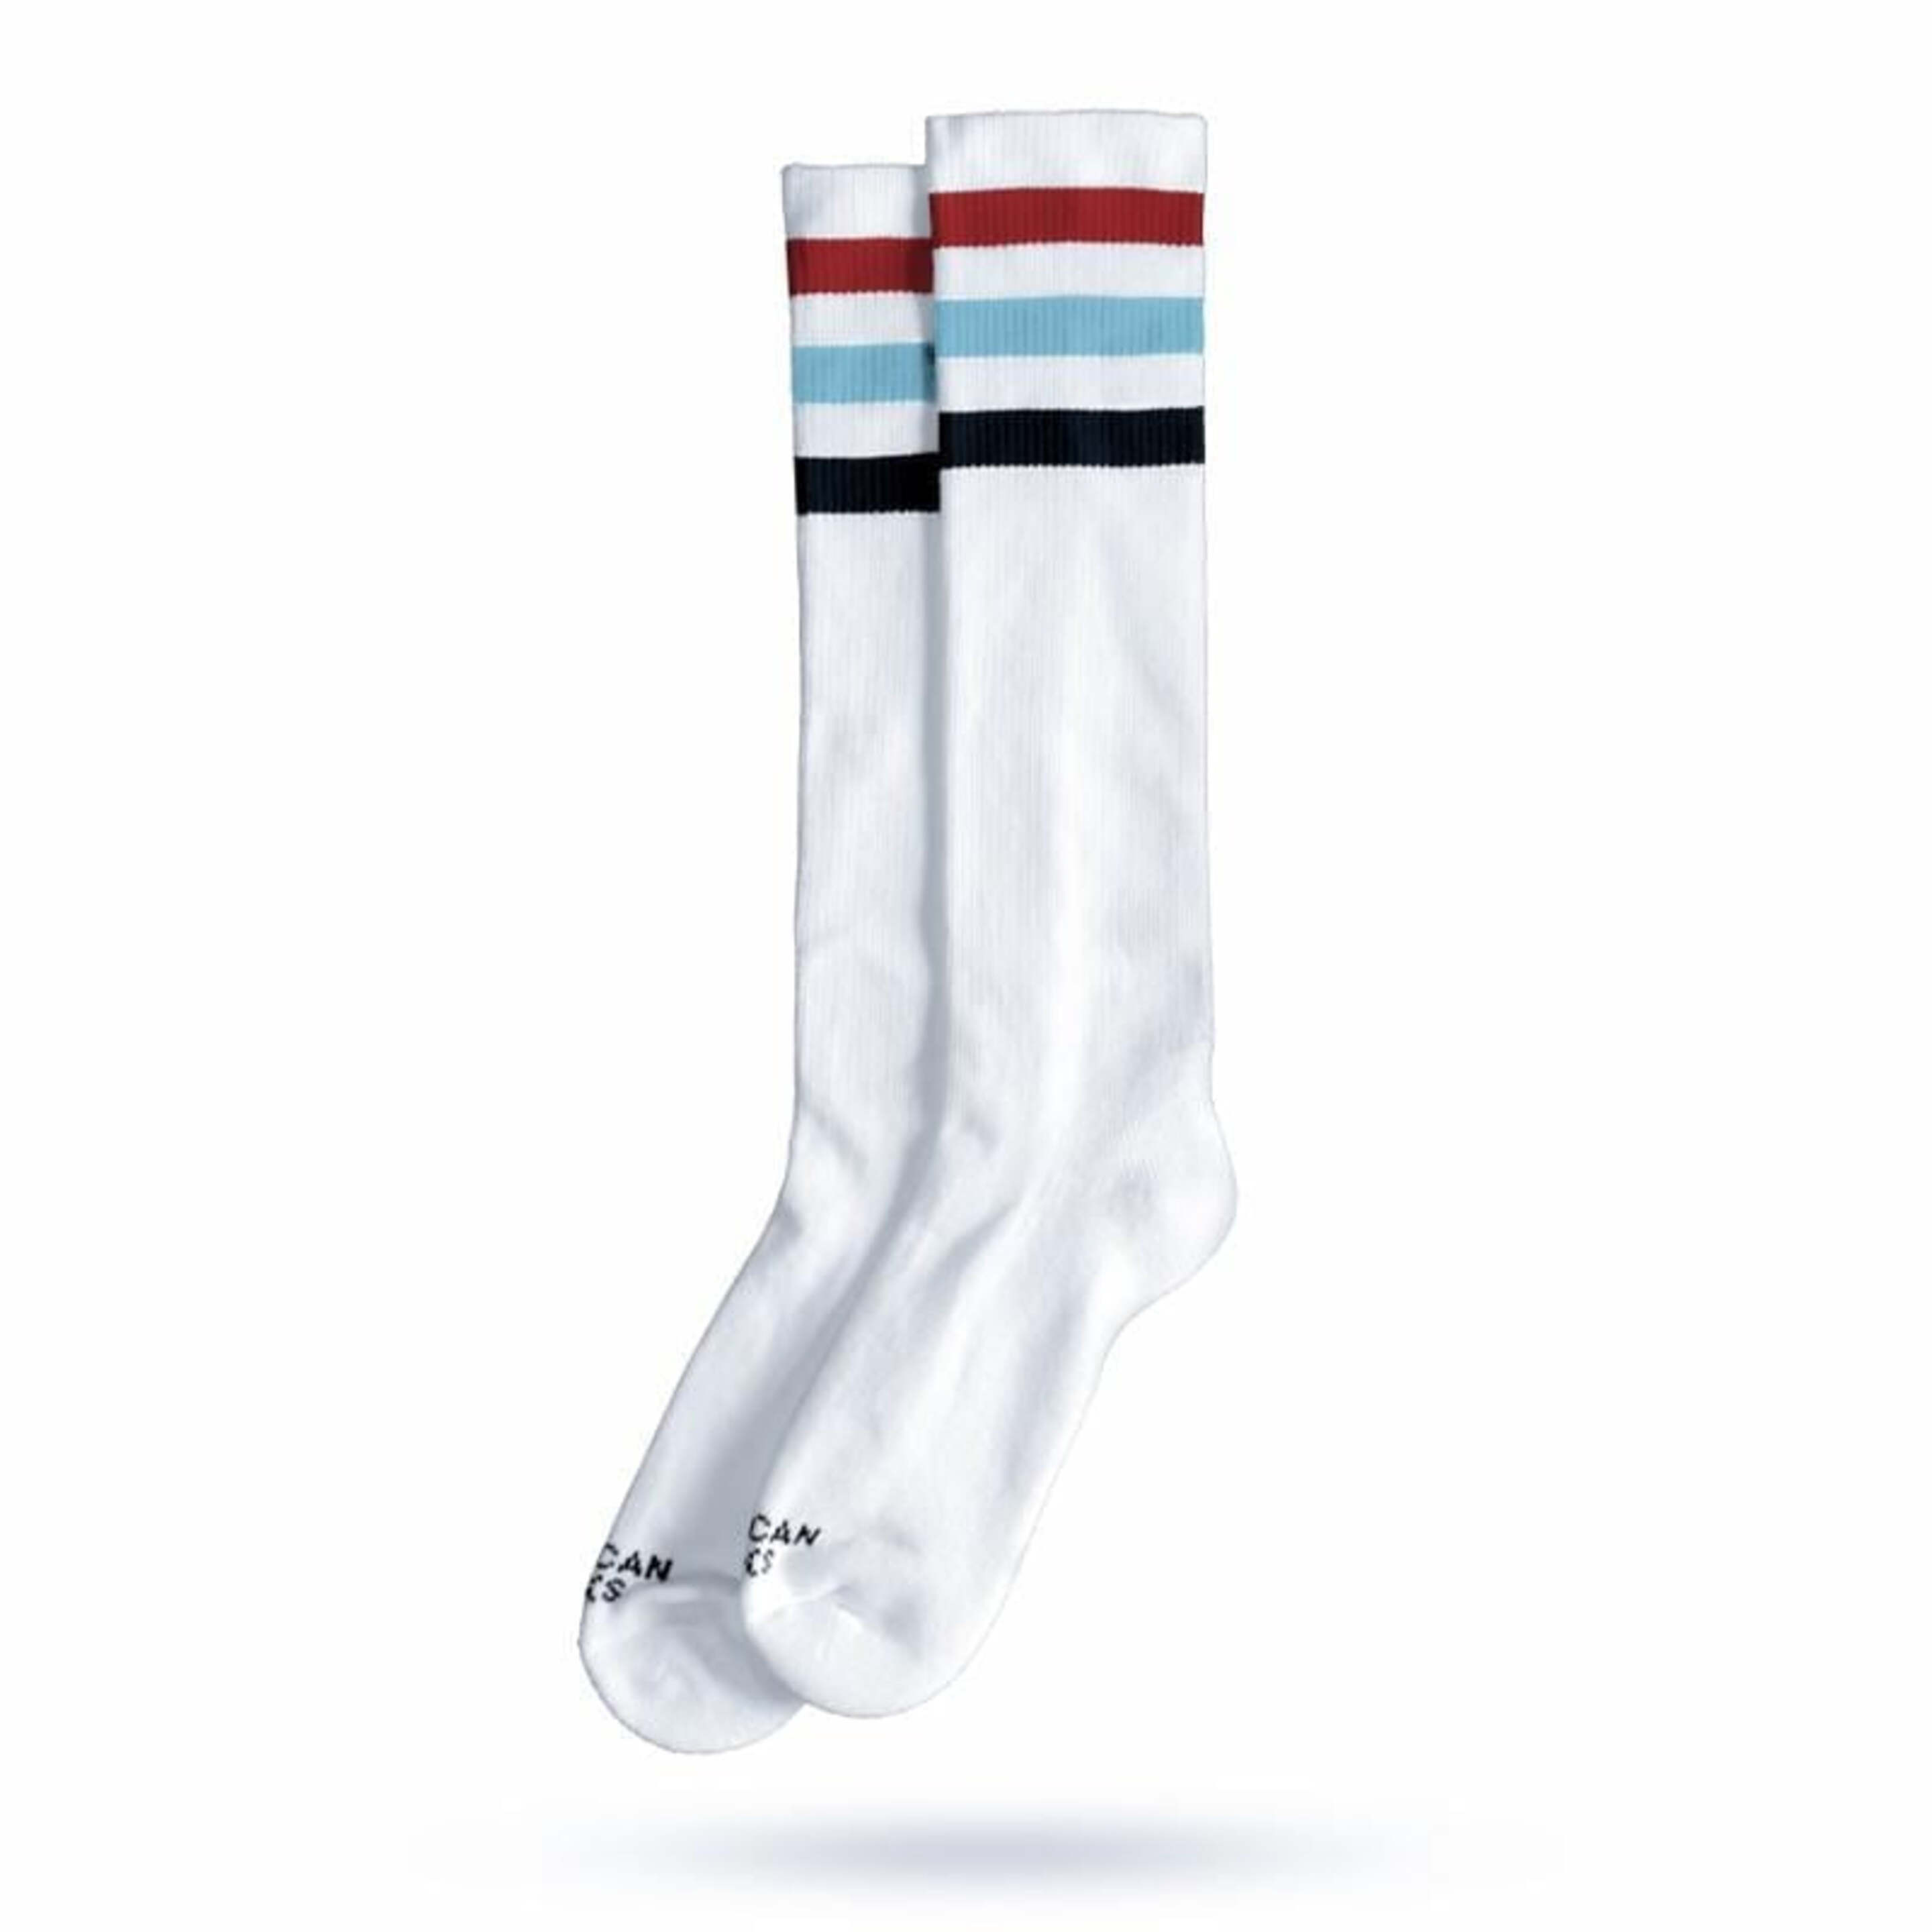 Meias American Socks - Mcfly - Knee High - Branco - Meias Técnicas Esportivas | Sport Zone MKP